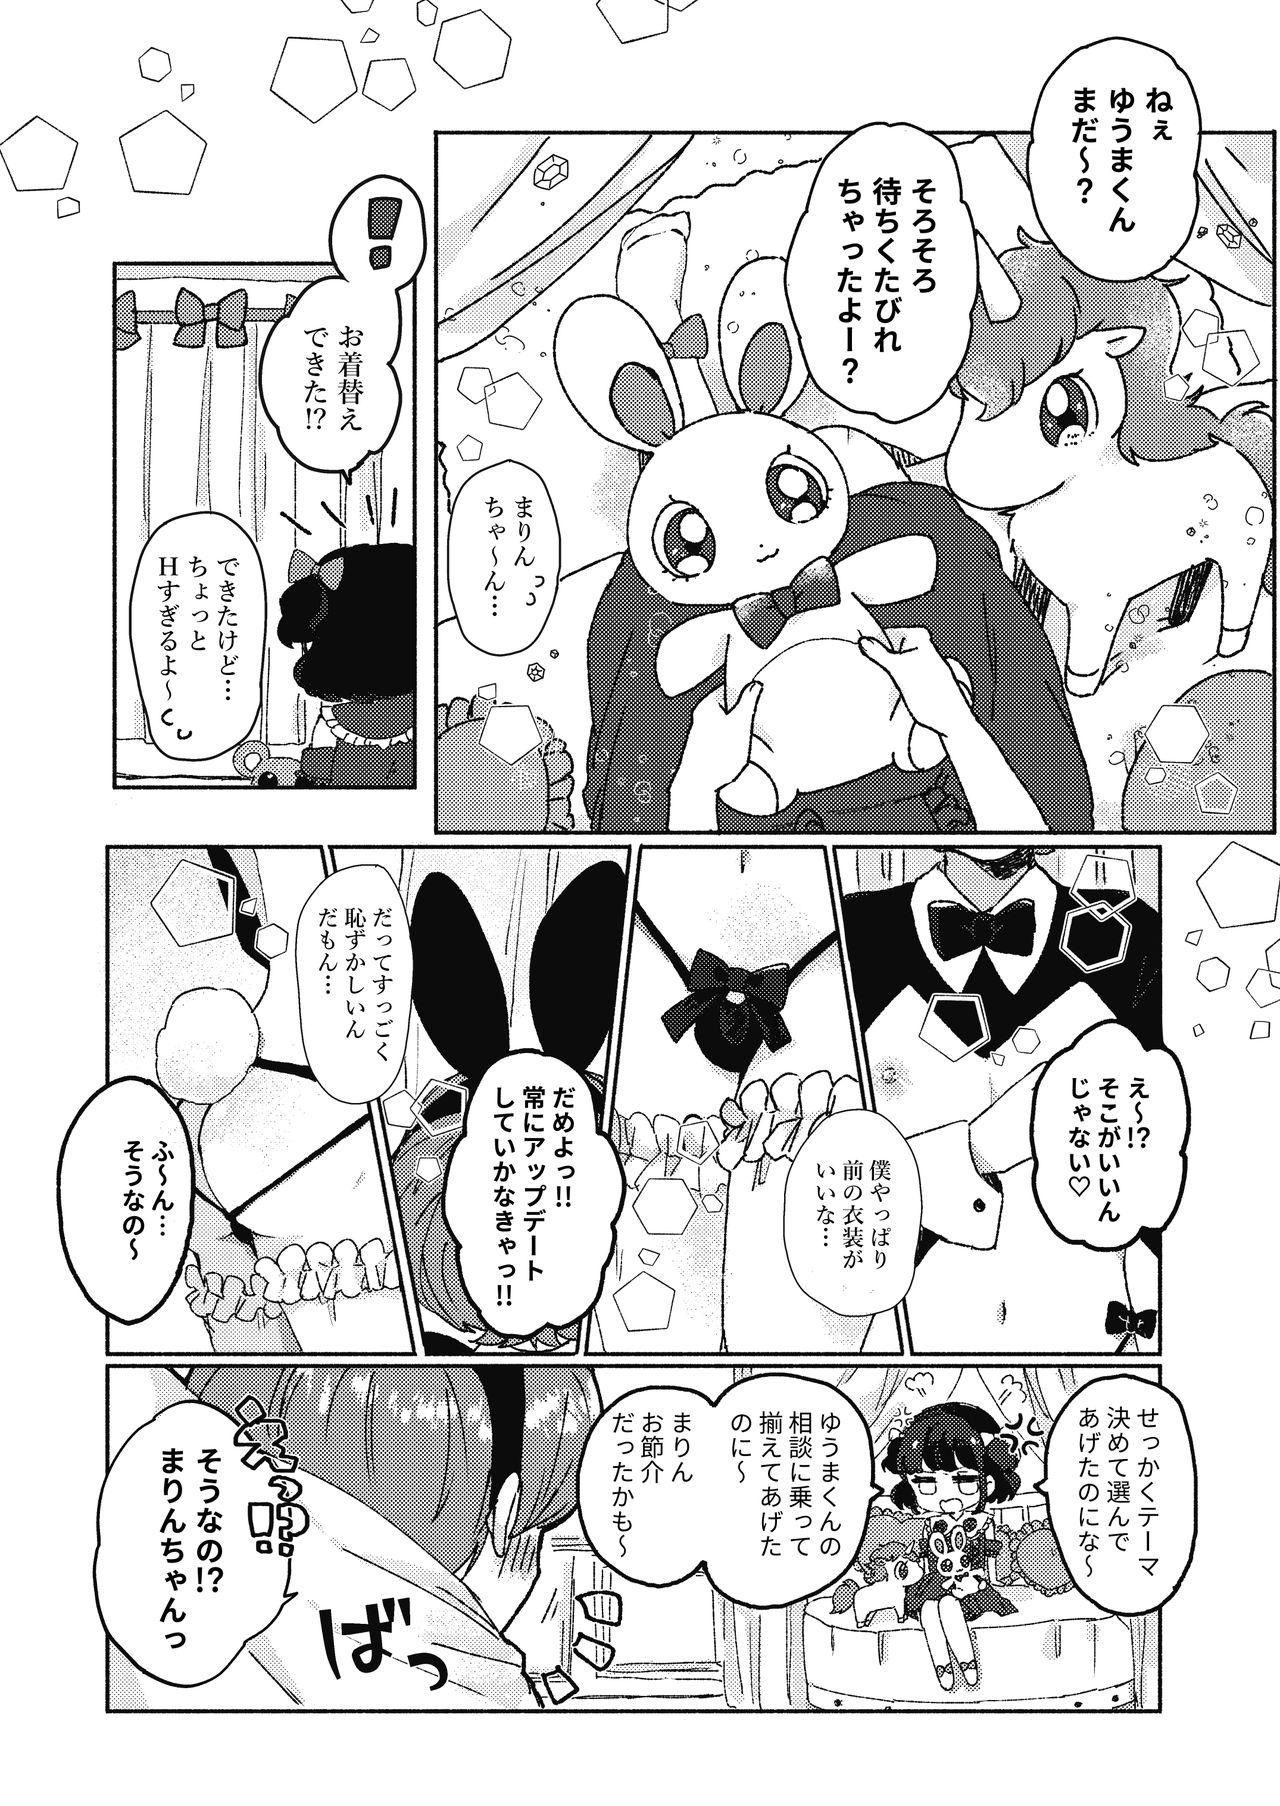 Sakasama Usagi o Hitorijime - Upside down rabbit all to yourself 5